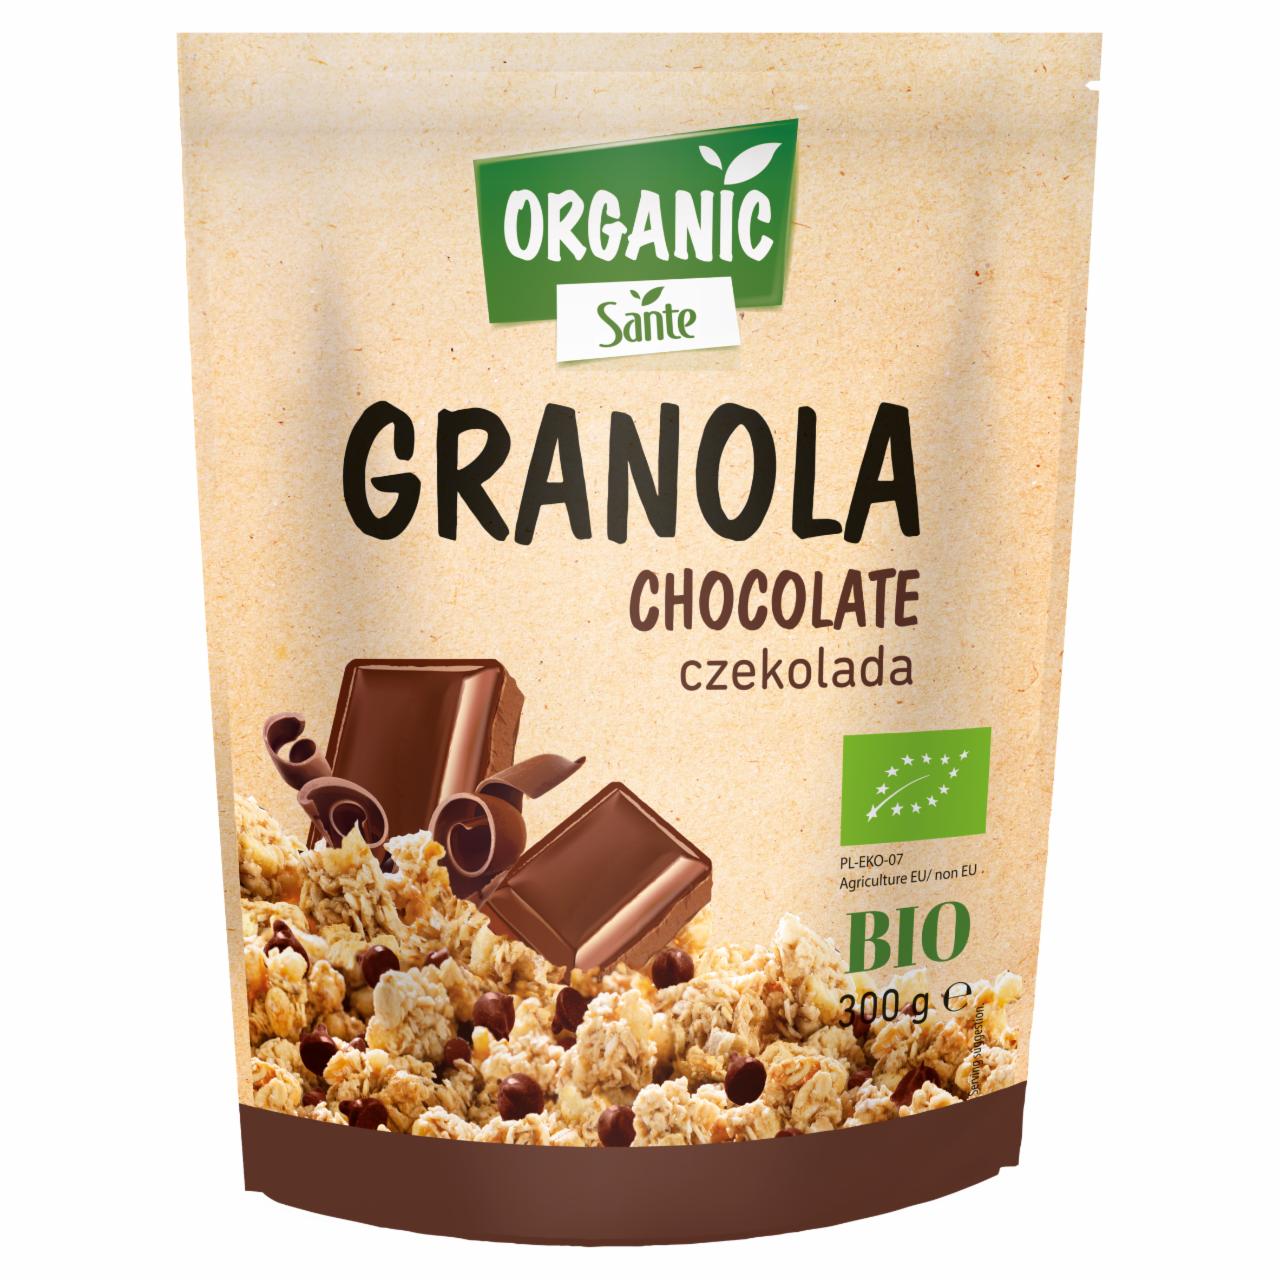 Zdjęcia - Sante Organic Granola czekolada 300 g